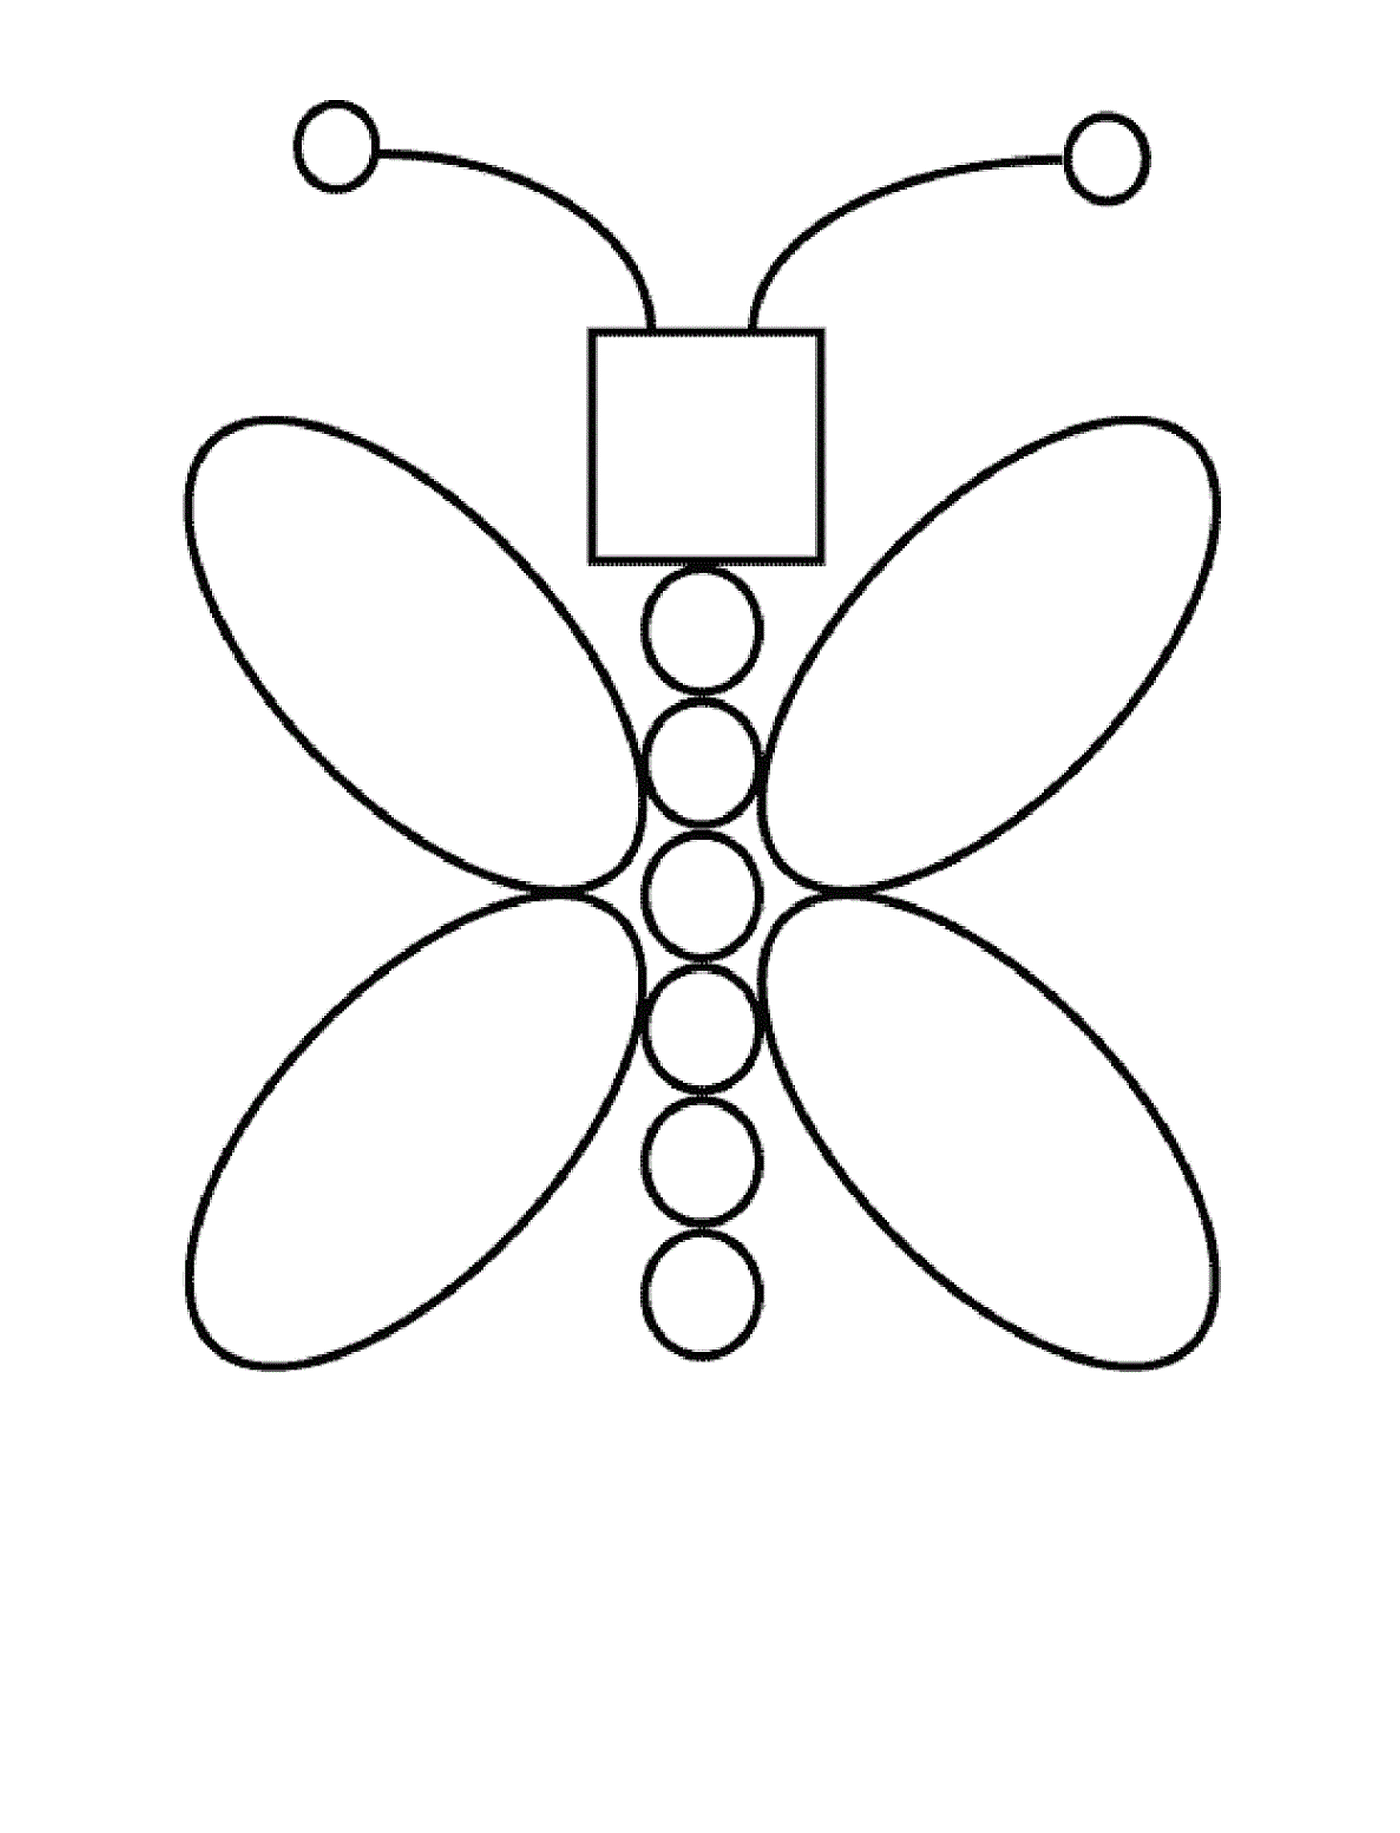  Бабочка с кружками 